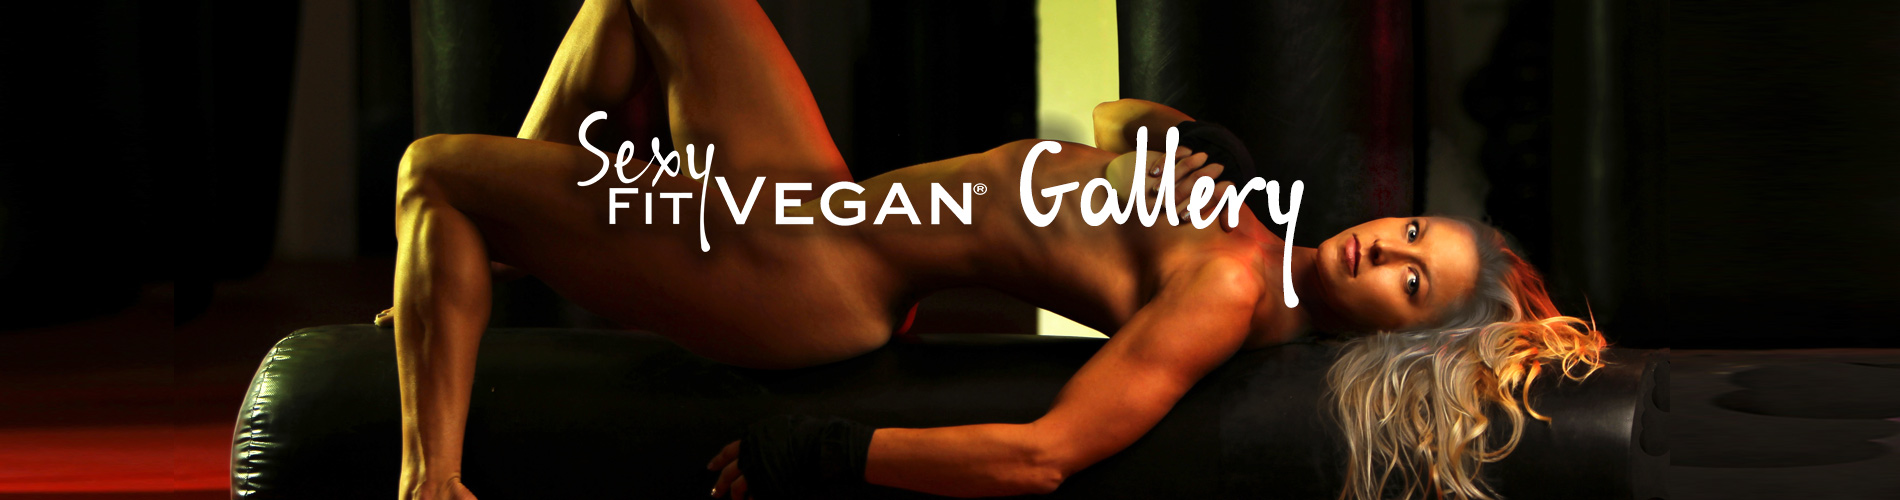 Sexy-Fit-Vegan-Gallery-Slider